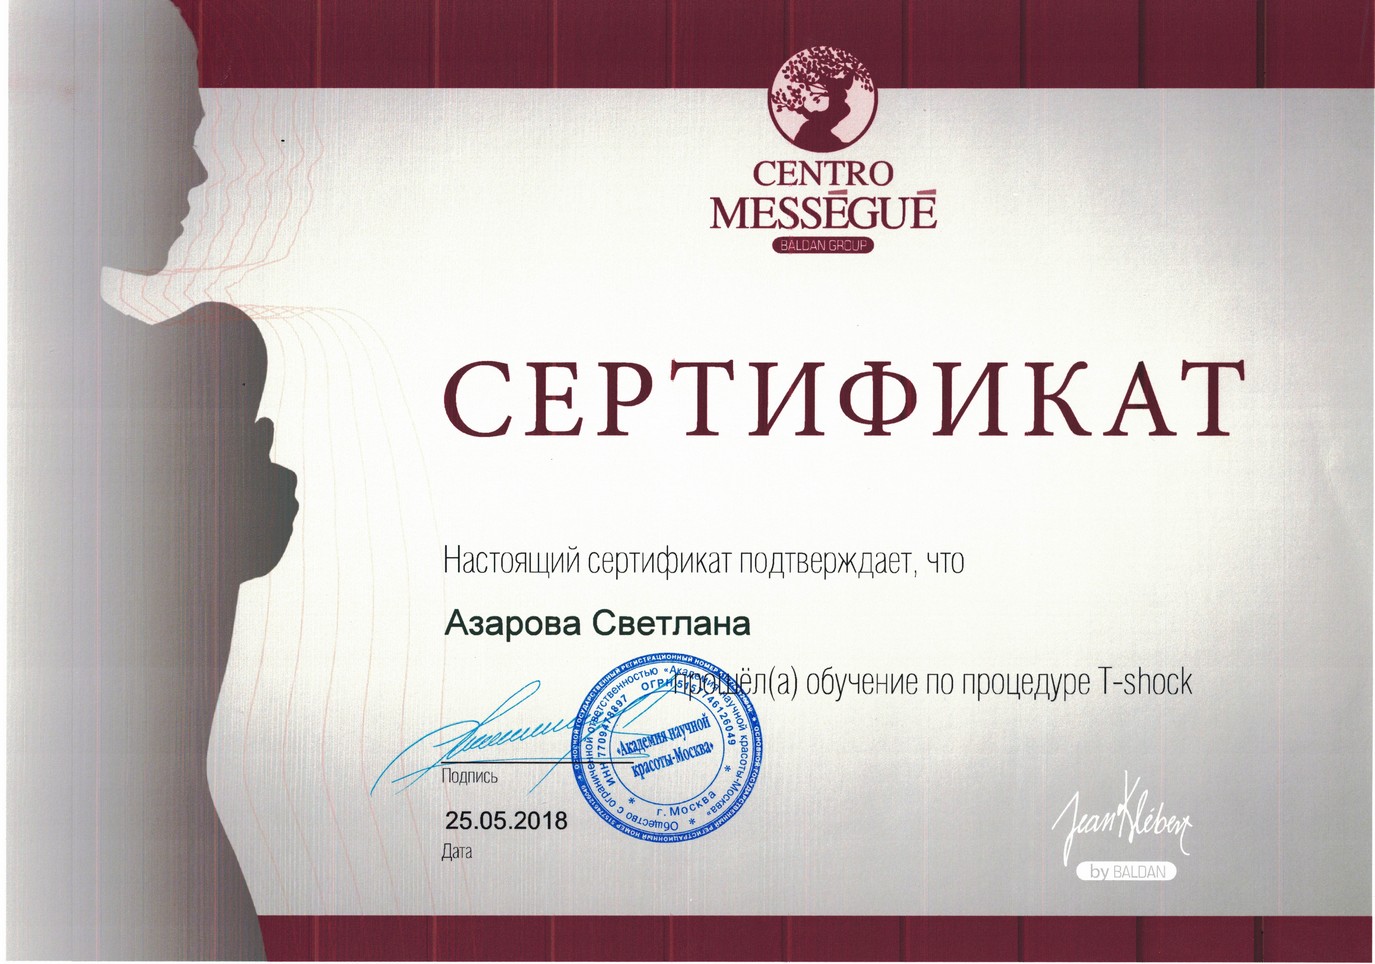 Сертификаты спб мужчине. Сертификат. Сертификат массажиста. Сертификат по аппаратному массажу. Сертификат курсы массажа.